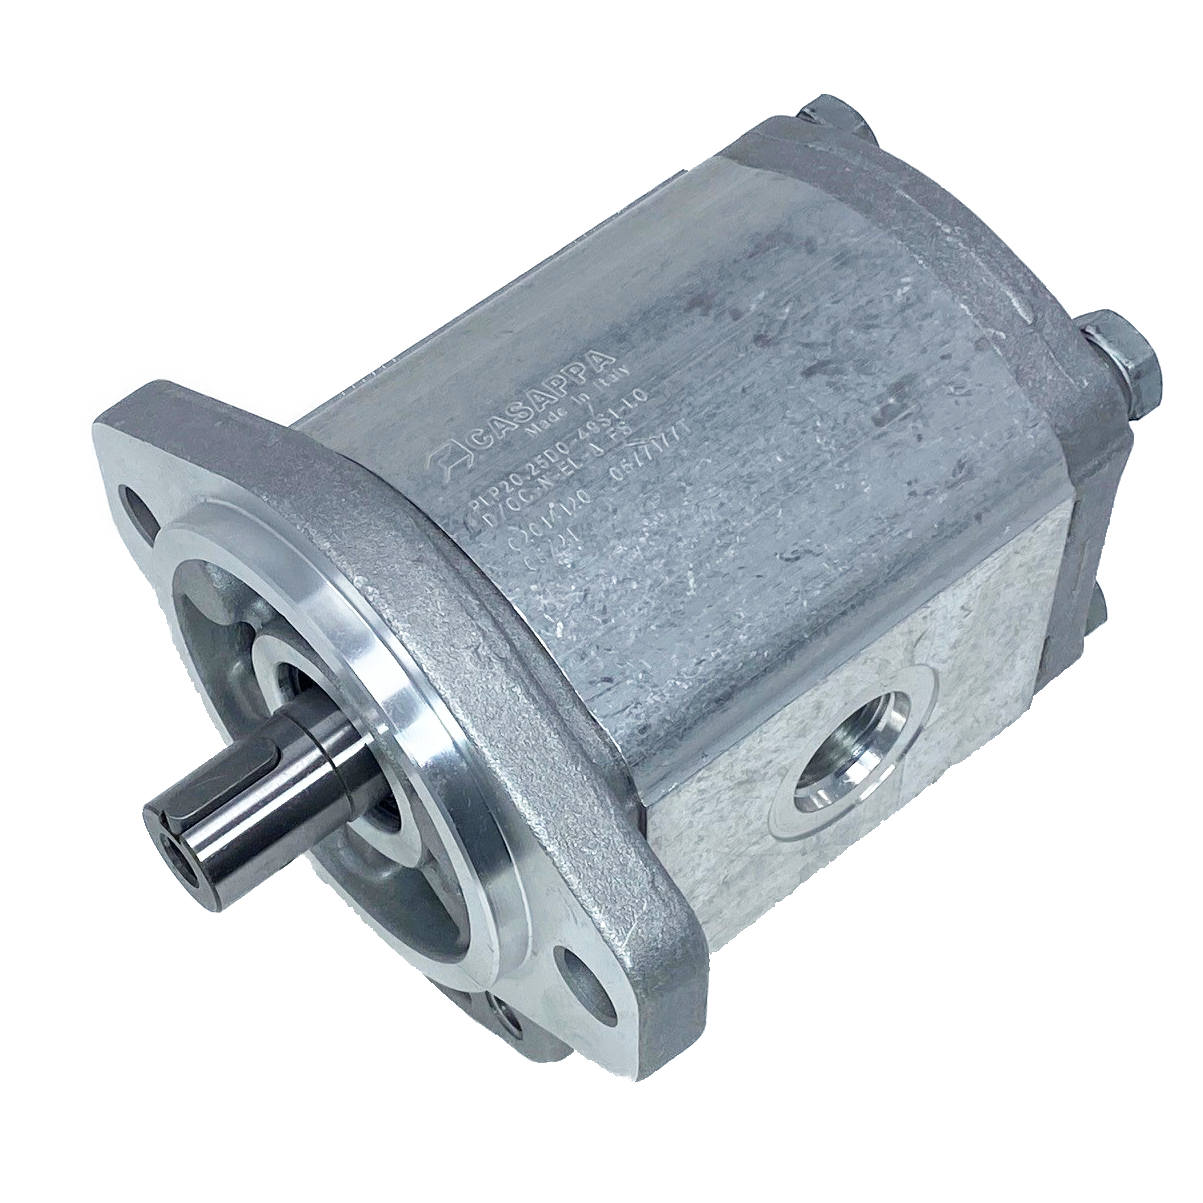 PHP20.31,5D0-50S9-LOG/OC-N-EL : Casappa Polaris Gear Pump, 33.03cc, 2900psi Rated, 2500RPM, CW, 3/4" Bore x 3/16" Key Shaft, SAE A 2-Bolt Flange, 1.25" #20 SAE Inlet, 0.625 (5/8") #10 SAE Outlet, Cast Iron Body, Aluminum Flange